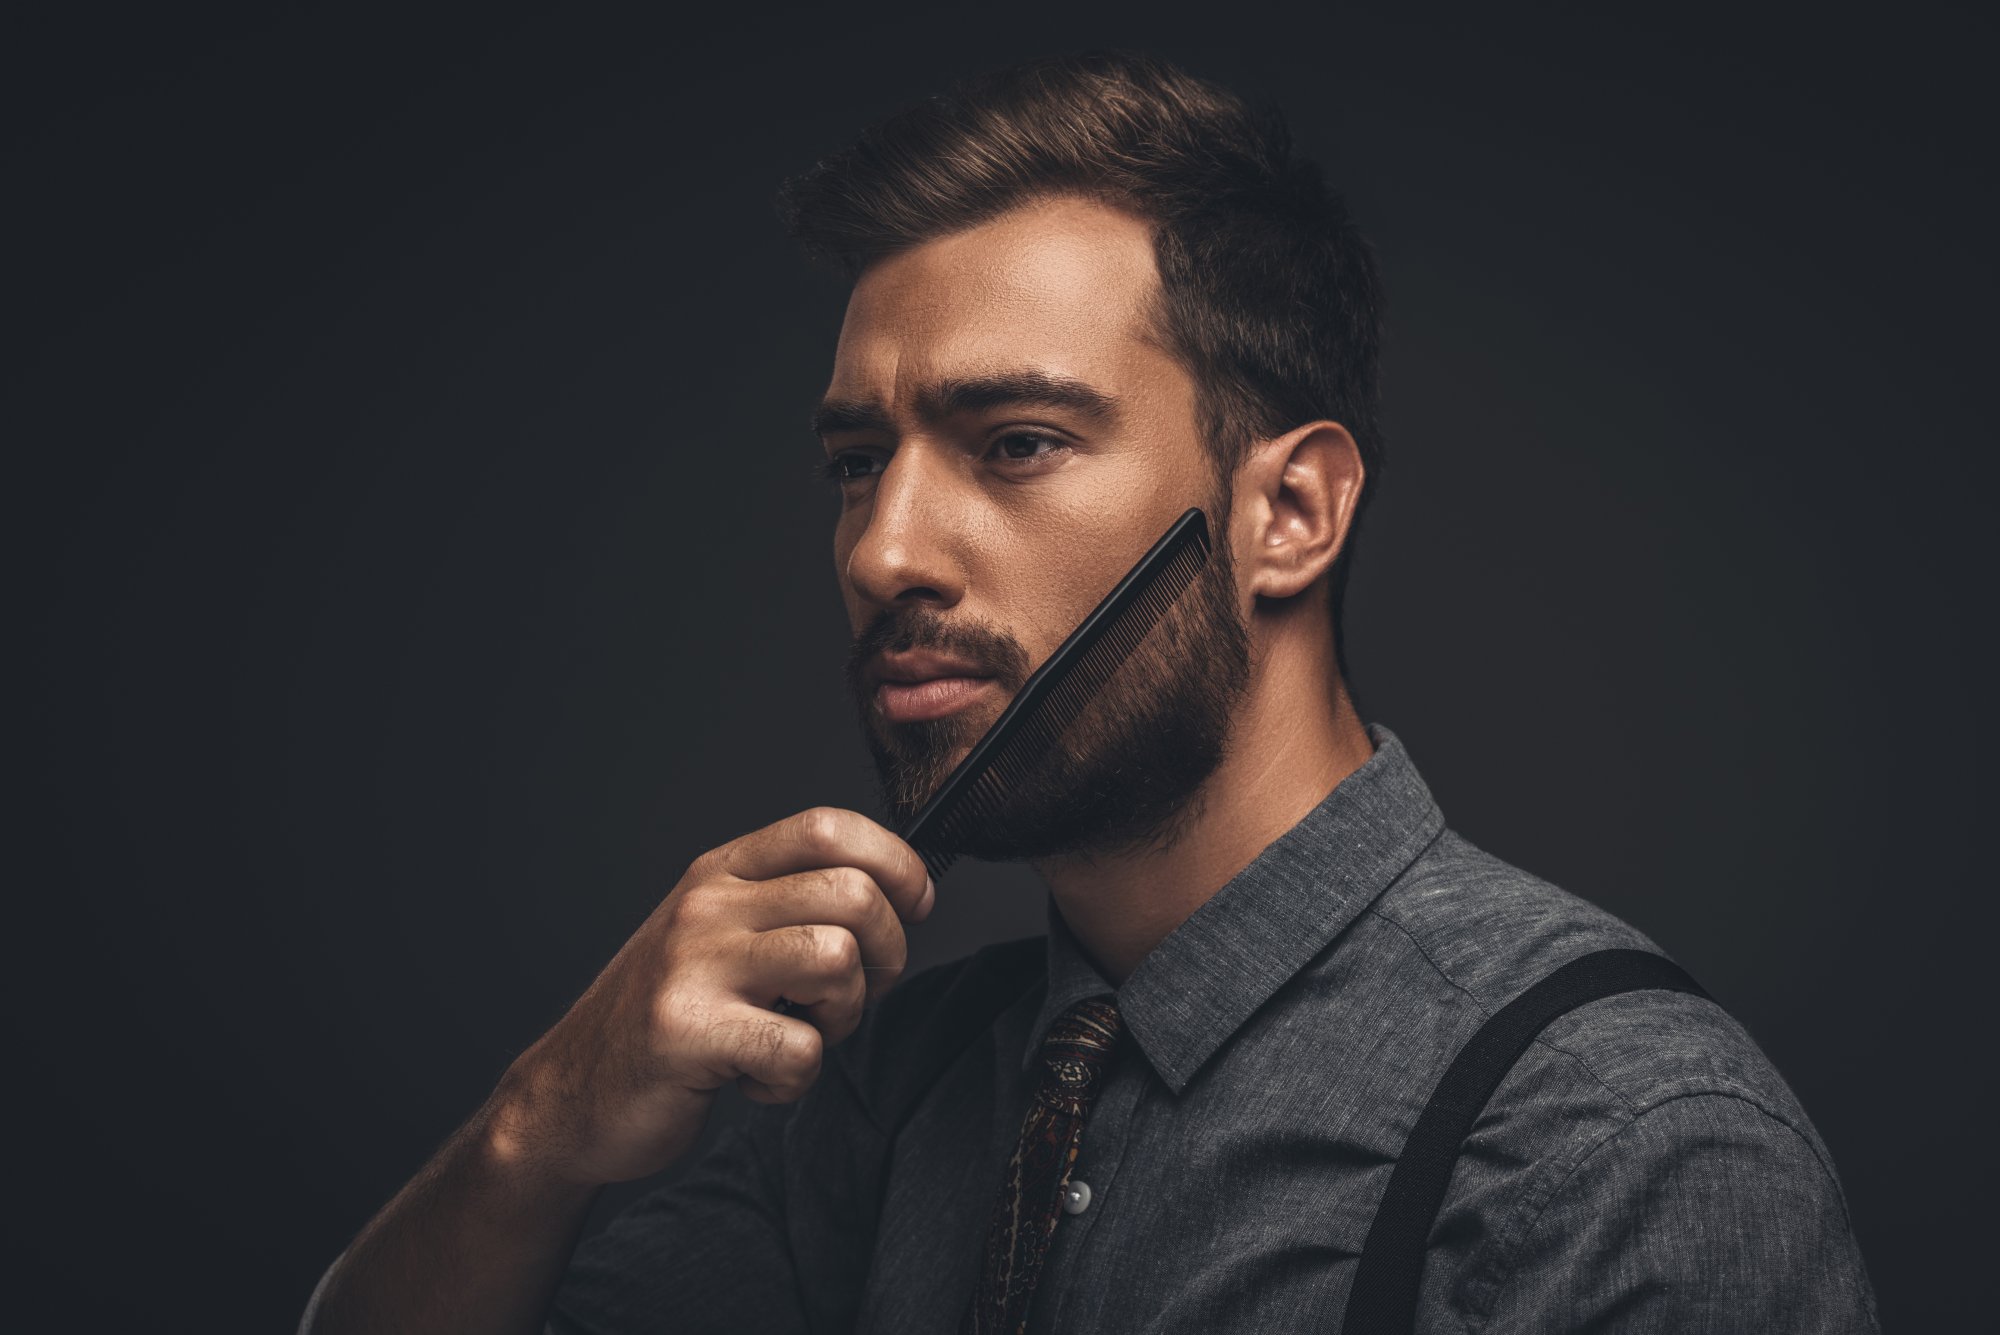 Beard grooming: 4 tipsγια τέλεια περιποίηση στο σπίτι